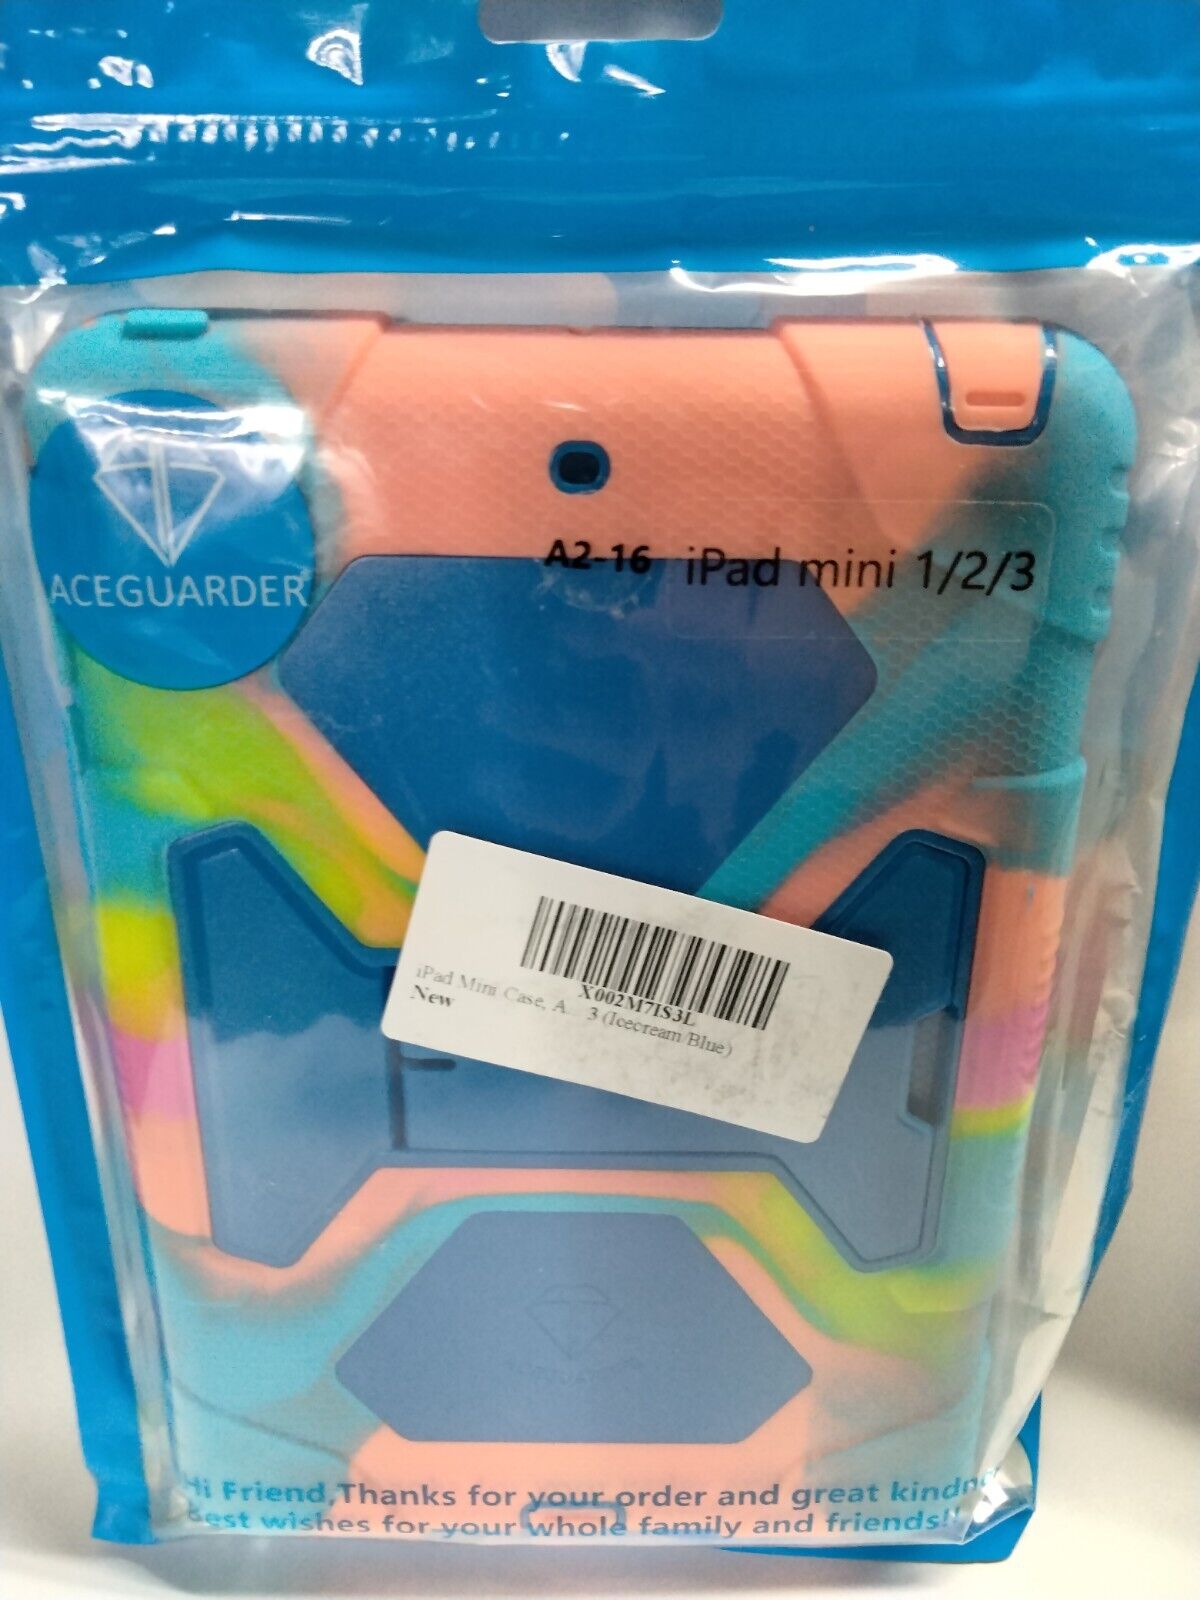 NEW Aceguarder Antibacterial iPad Case Set for iPad Mini 1 2 3 Ice Cream/Blue